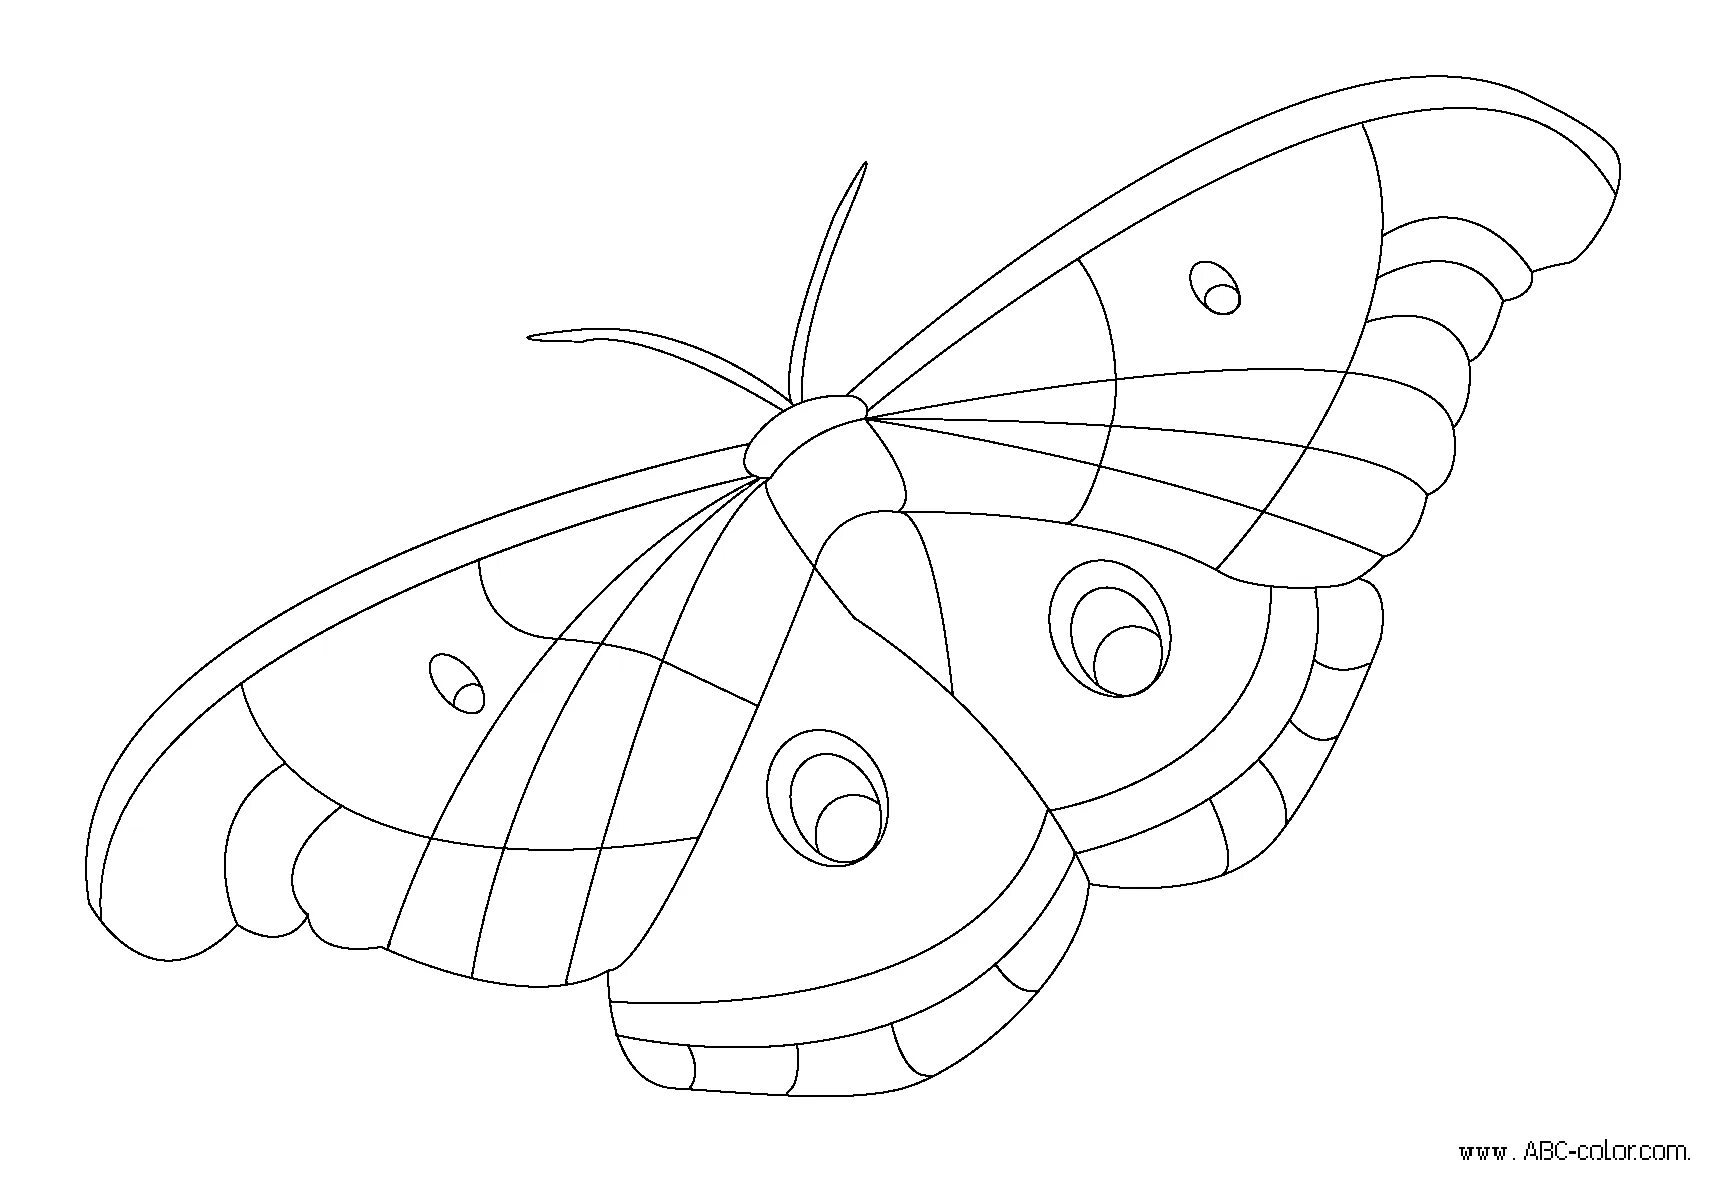 Apollo butterfly #11